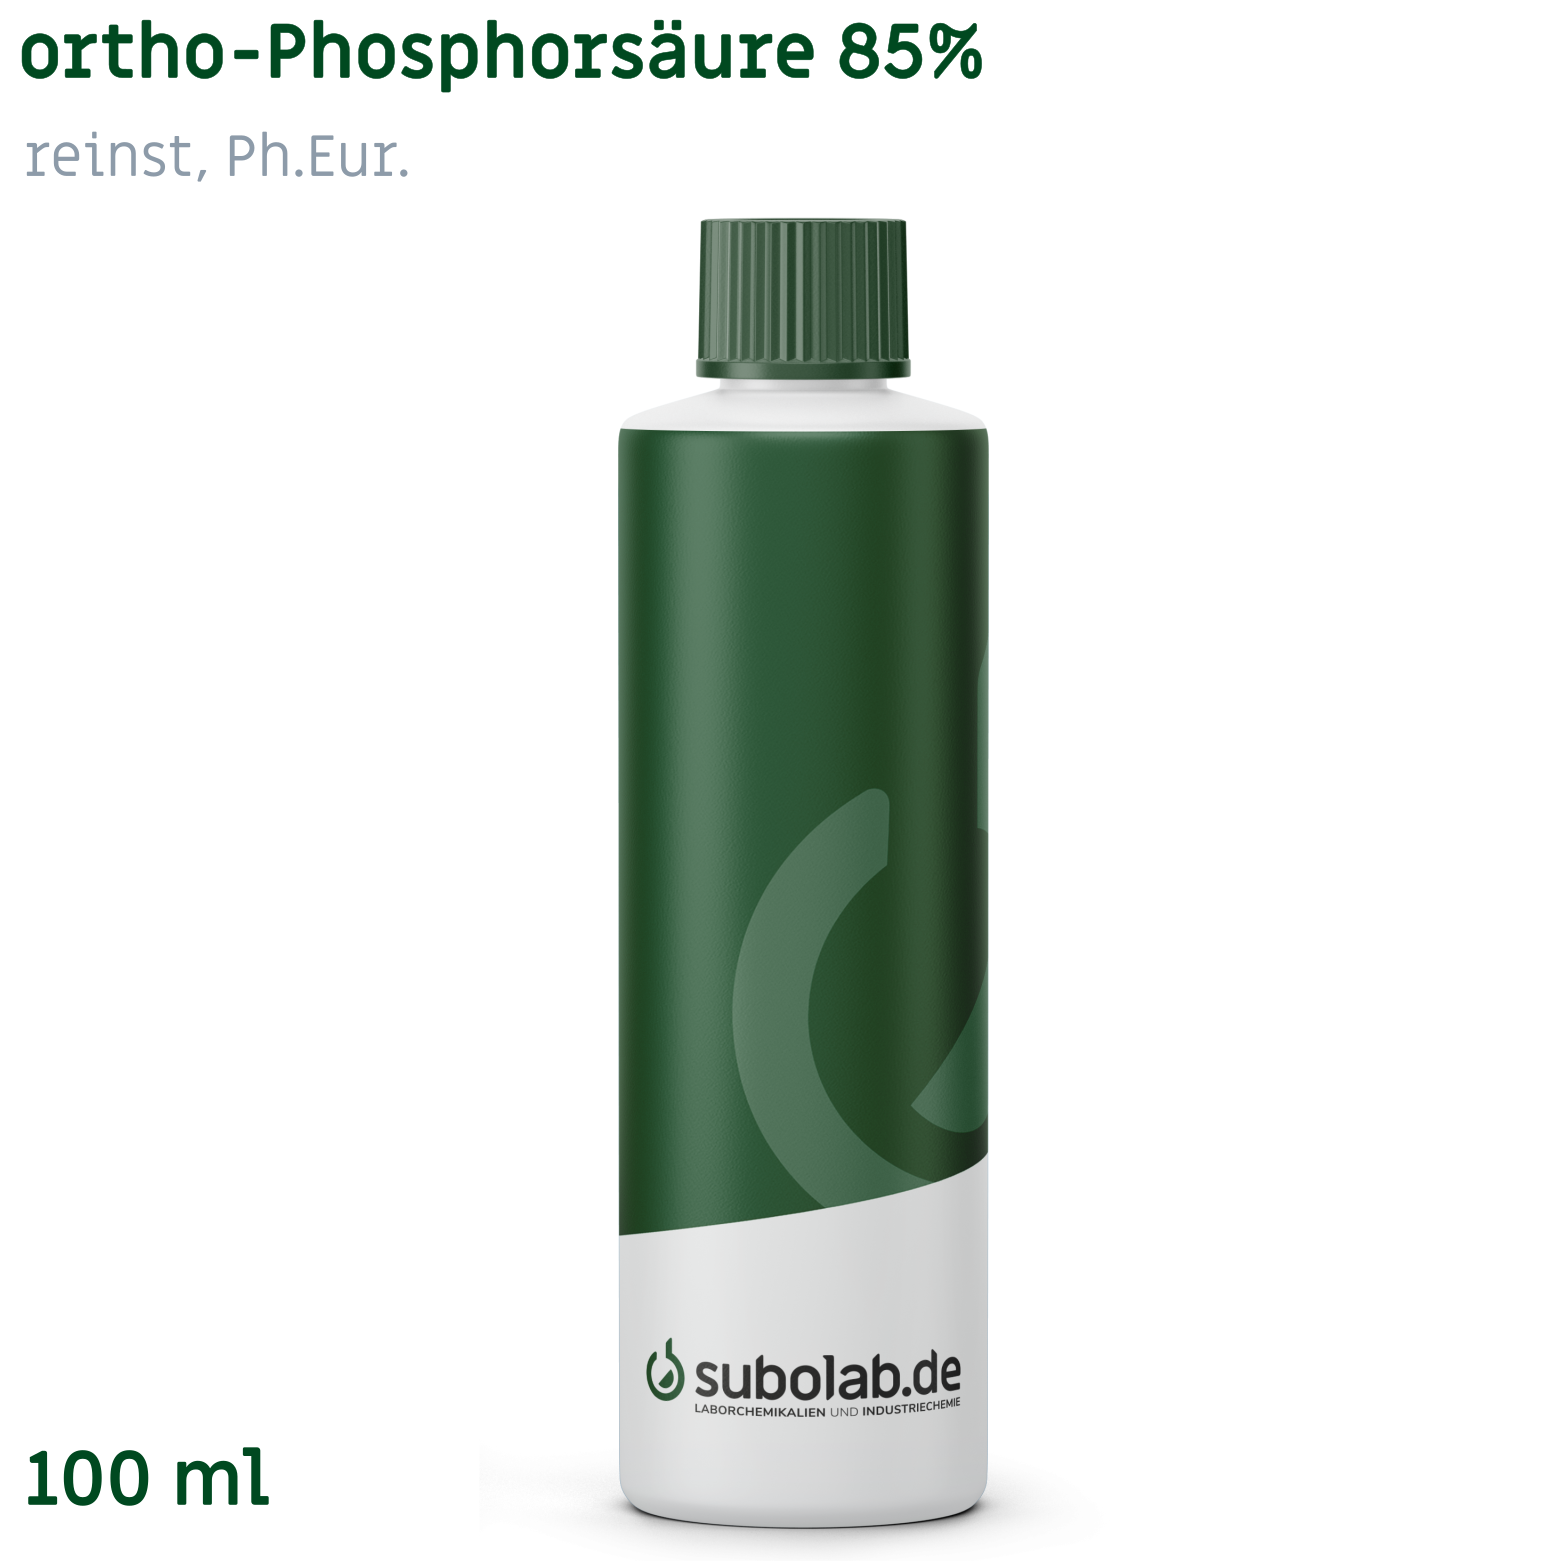 Bild von ortho-Phosphorsäure 85% reinst, Ph.Eur. (100 ml)